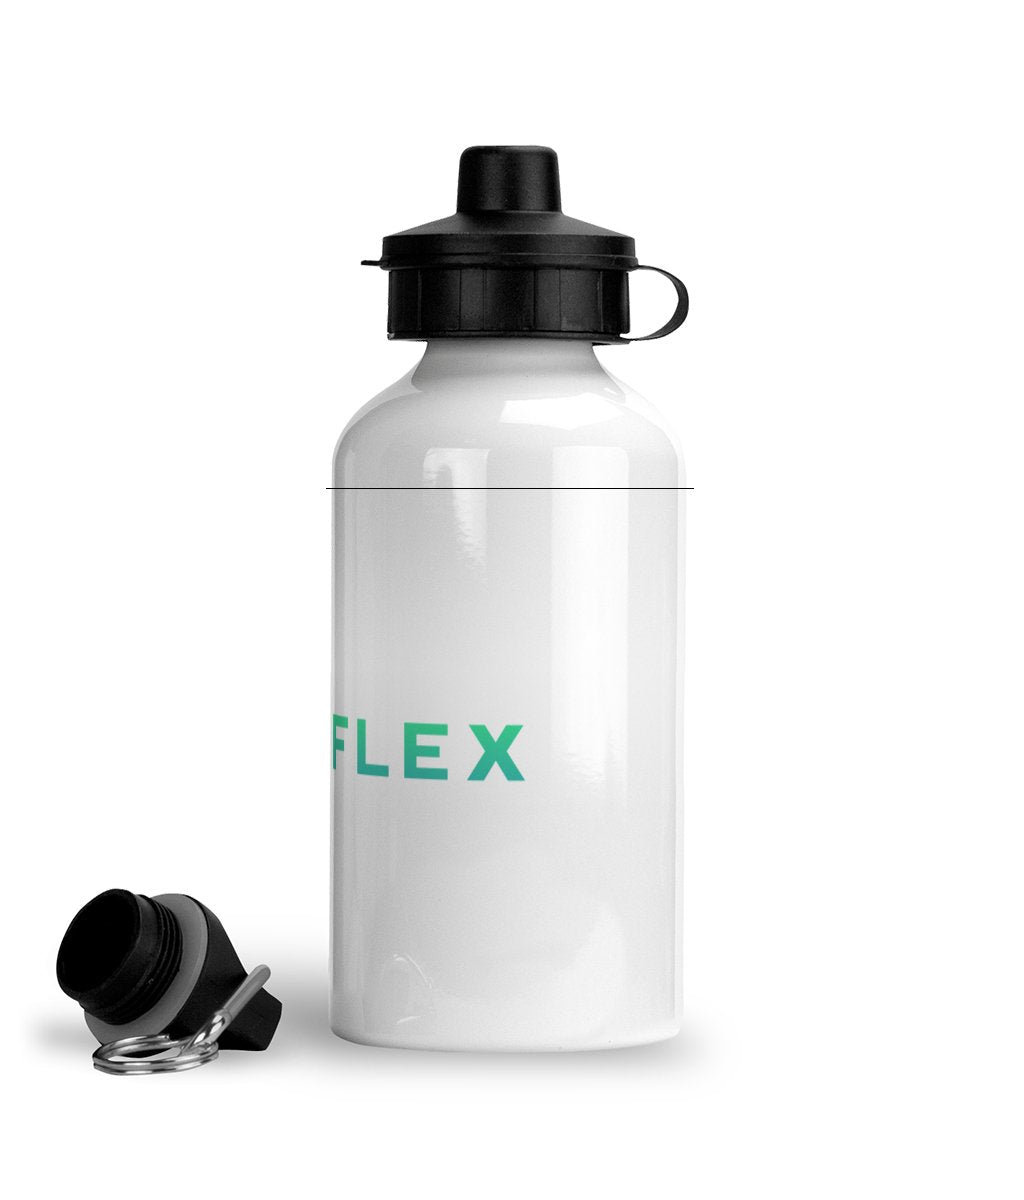 Just Flex Aluminium Sports Water Bottle